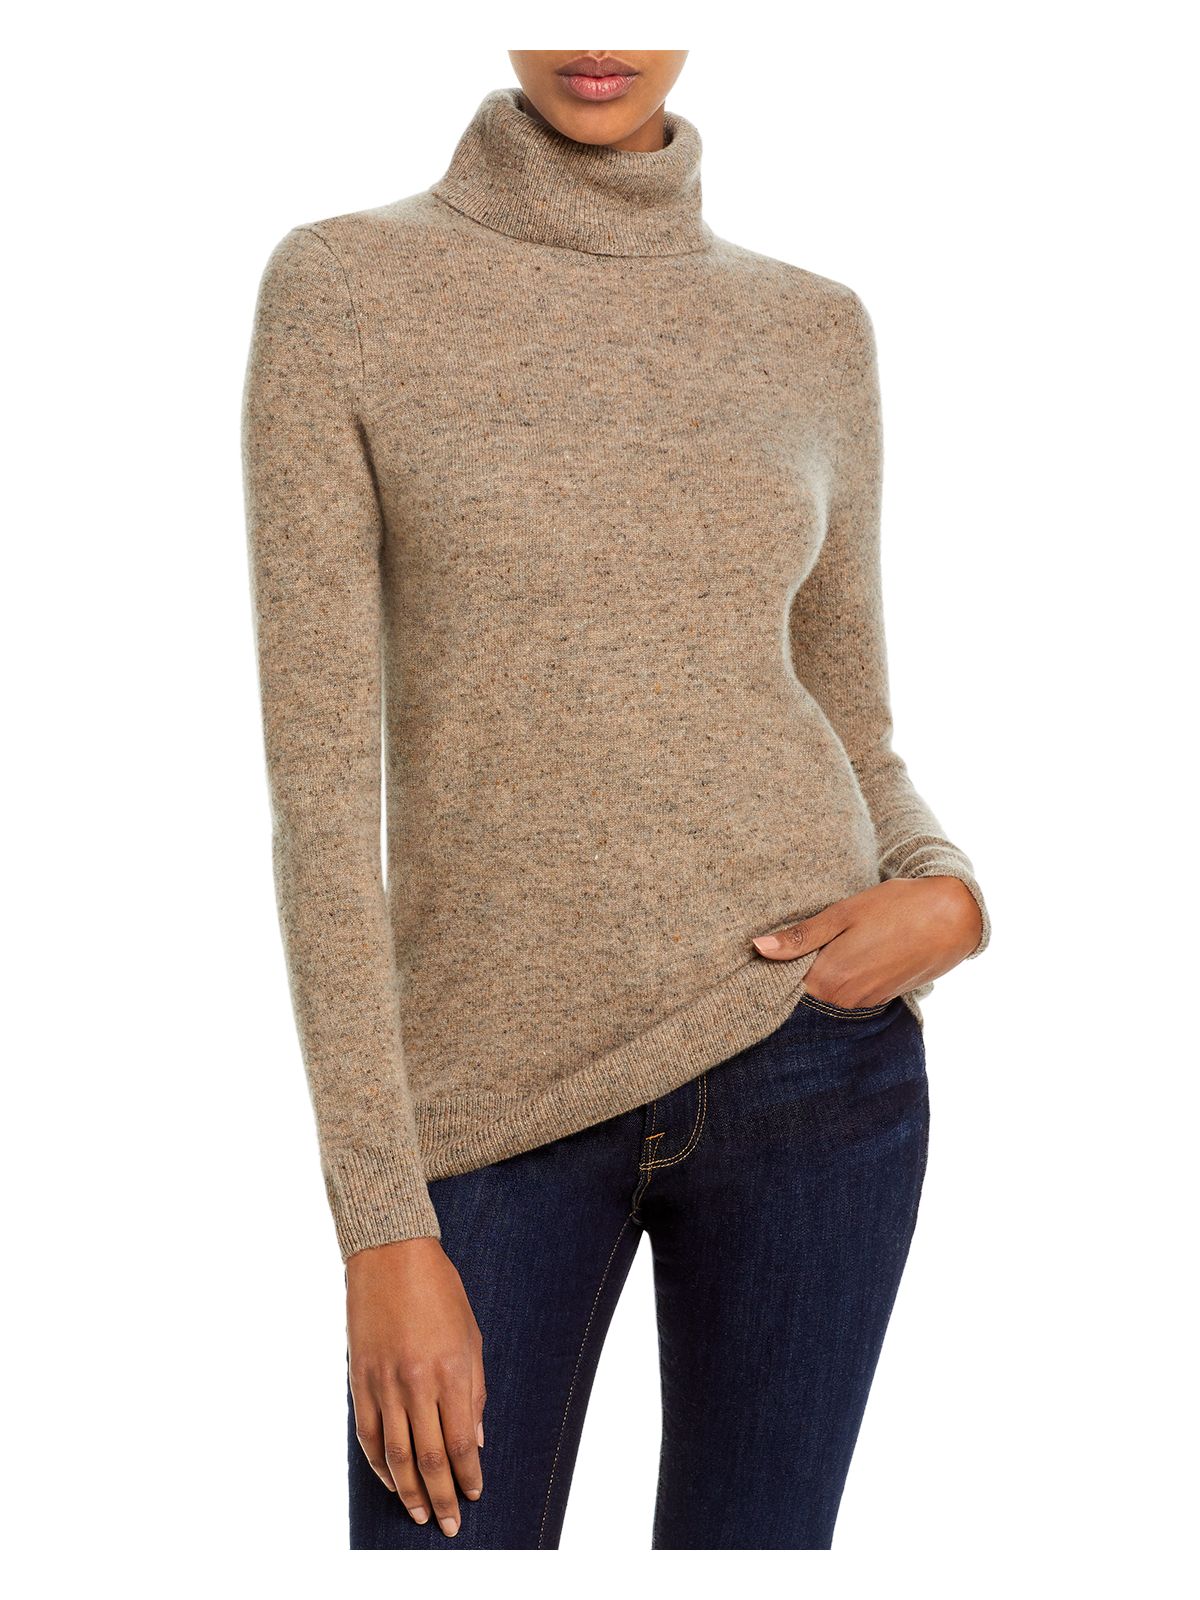 Designer Brand Womens Brown Heather Long Sleeve Turtle Neck Sweater XS